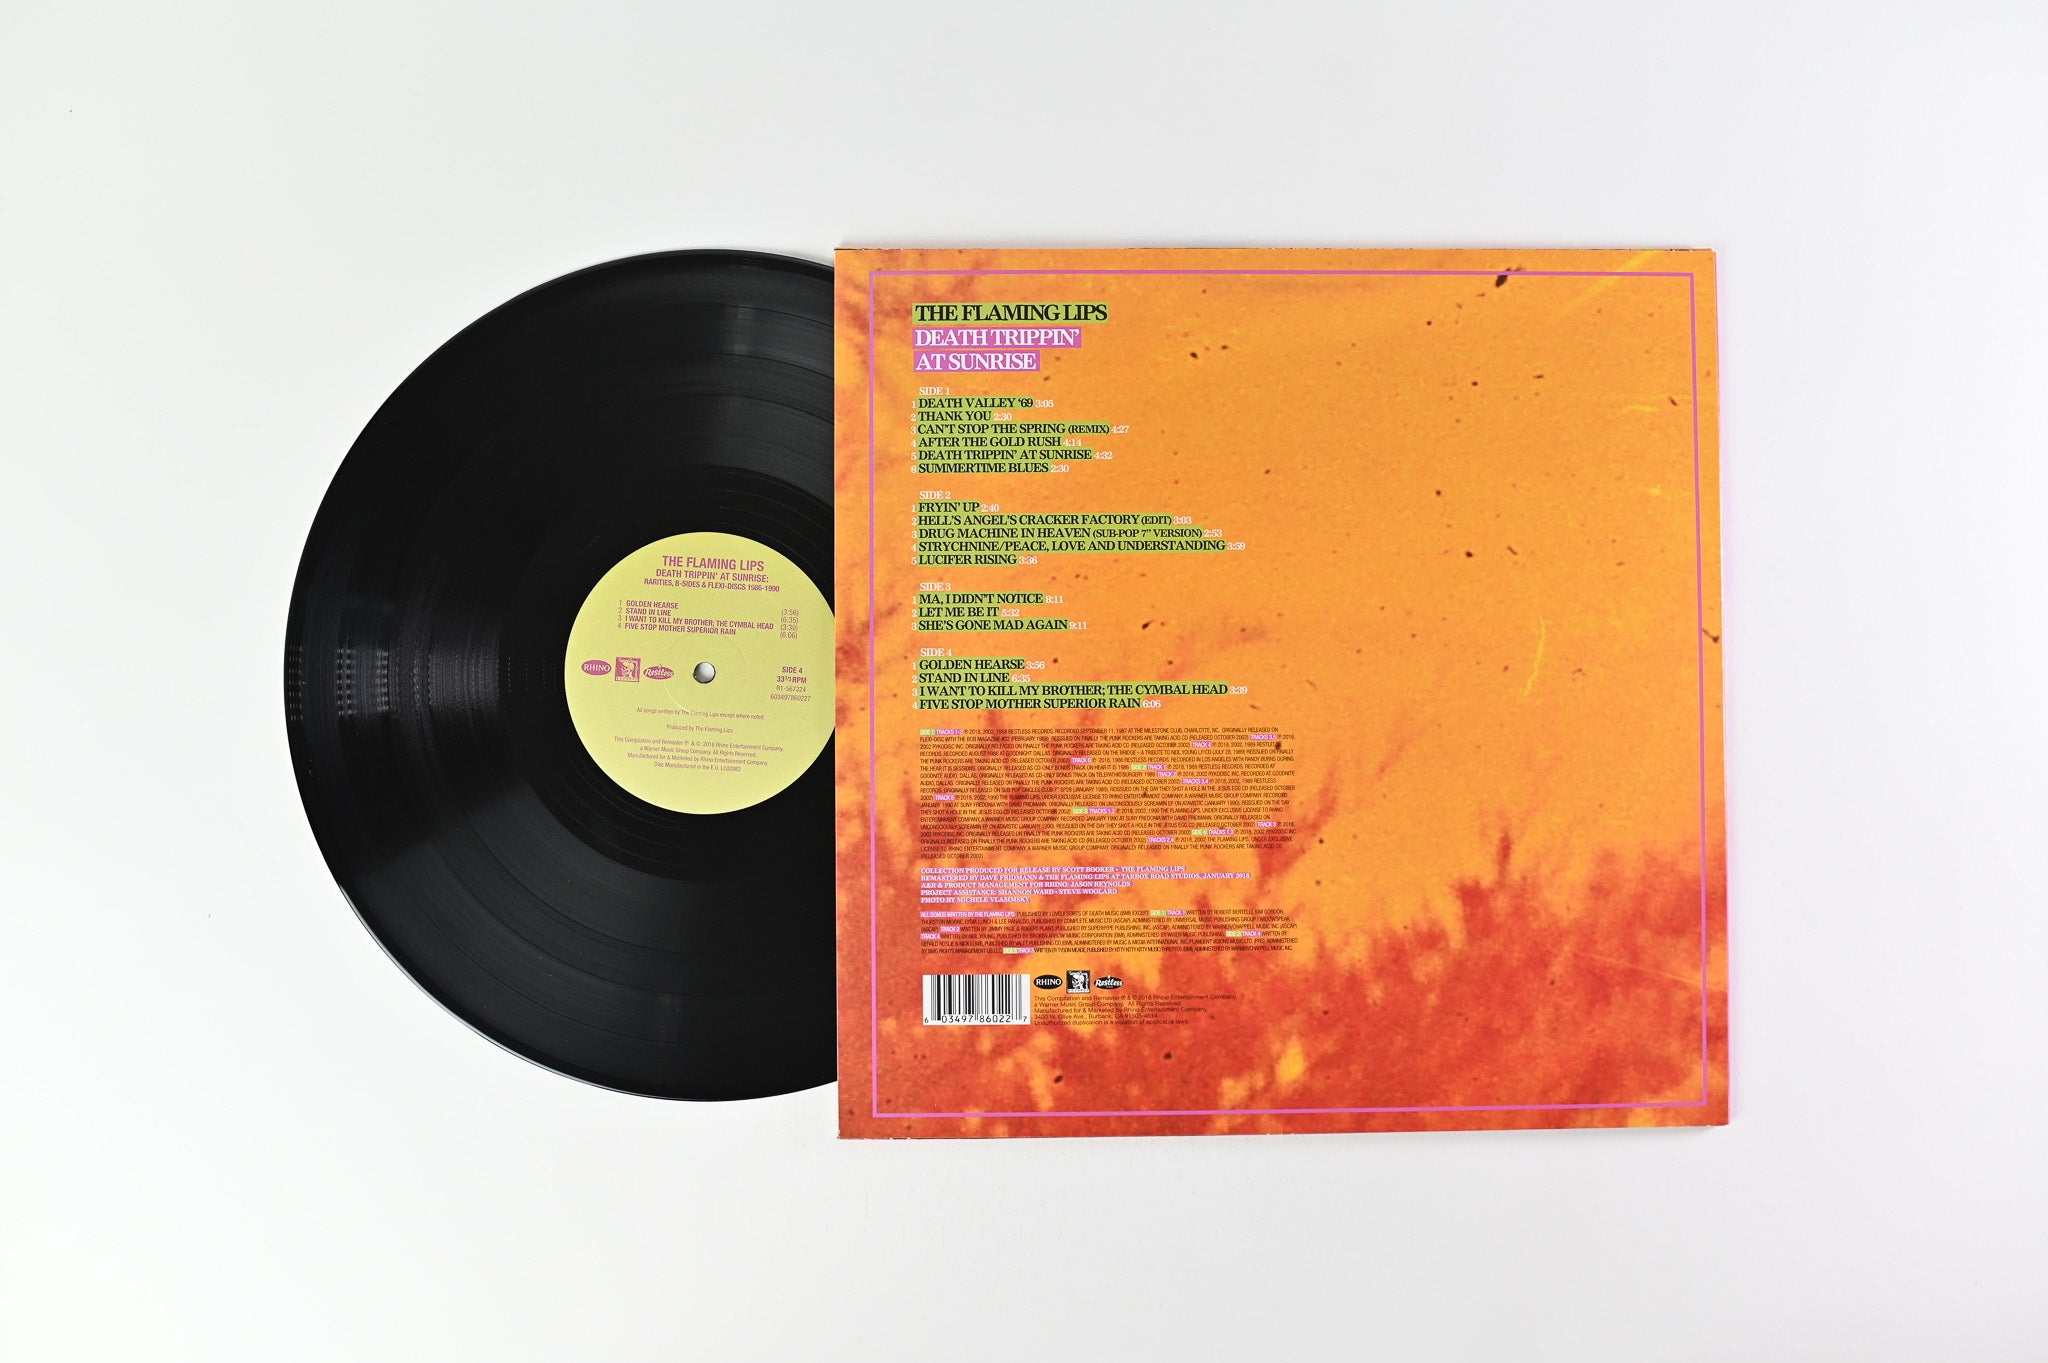 The Flaming Lips - Death Trippin' At Sunrise: Rarities, B-Sides & Flexi-Discs 1986-1990 on Rhino